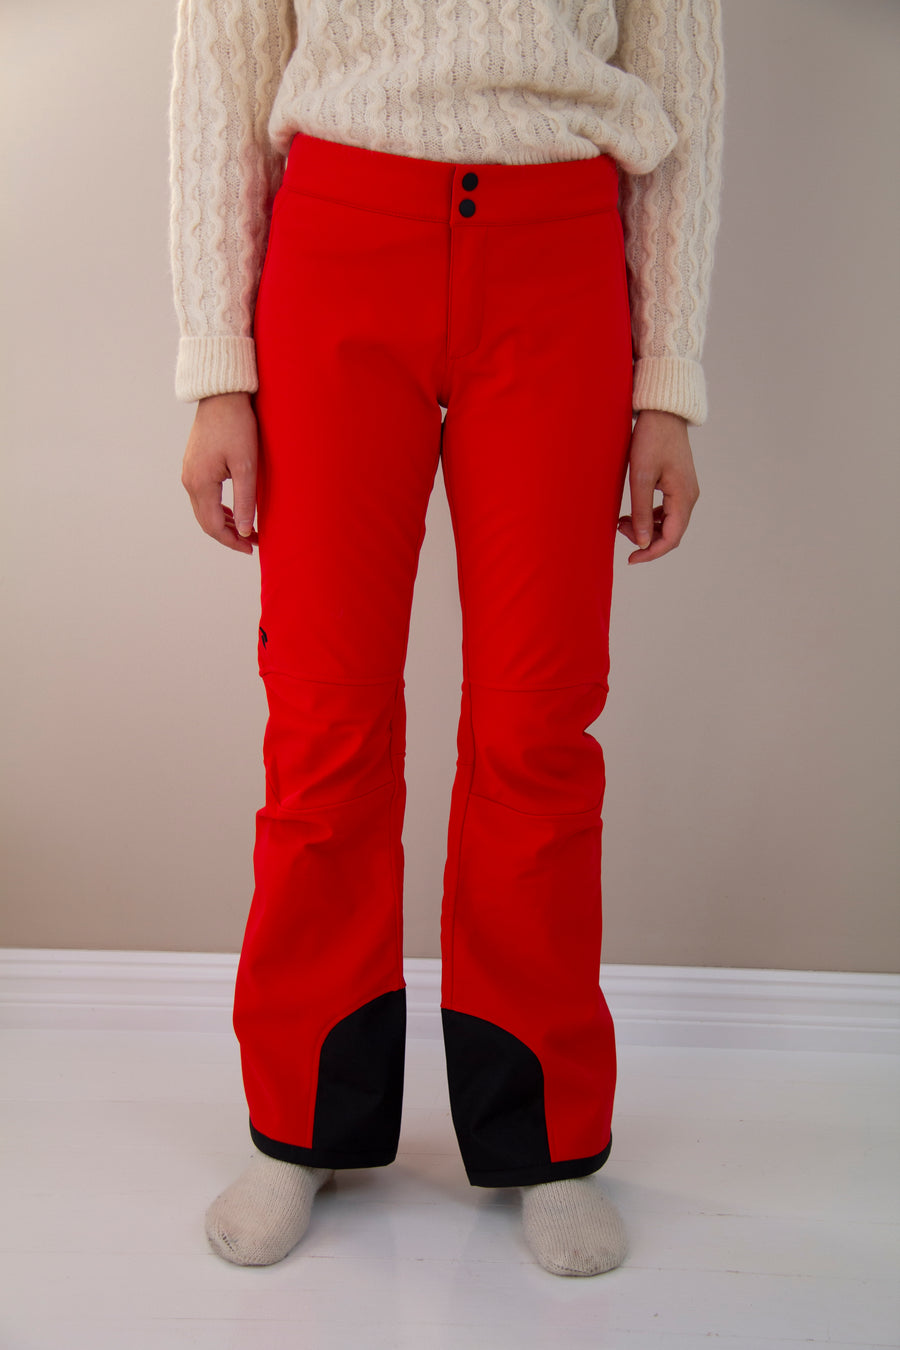 PEAK PERFORMANCE - Red Snow Pants